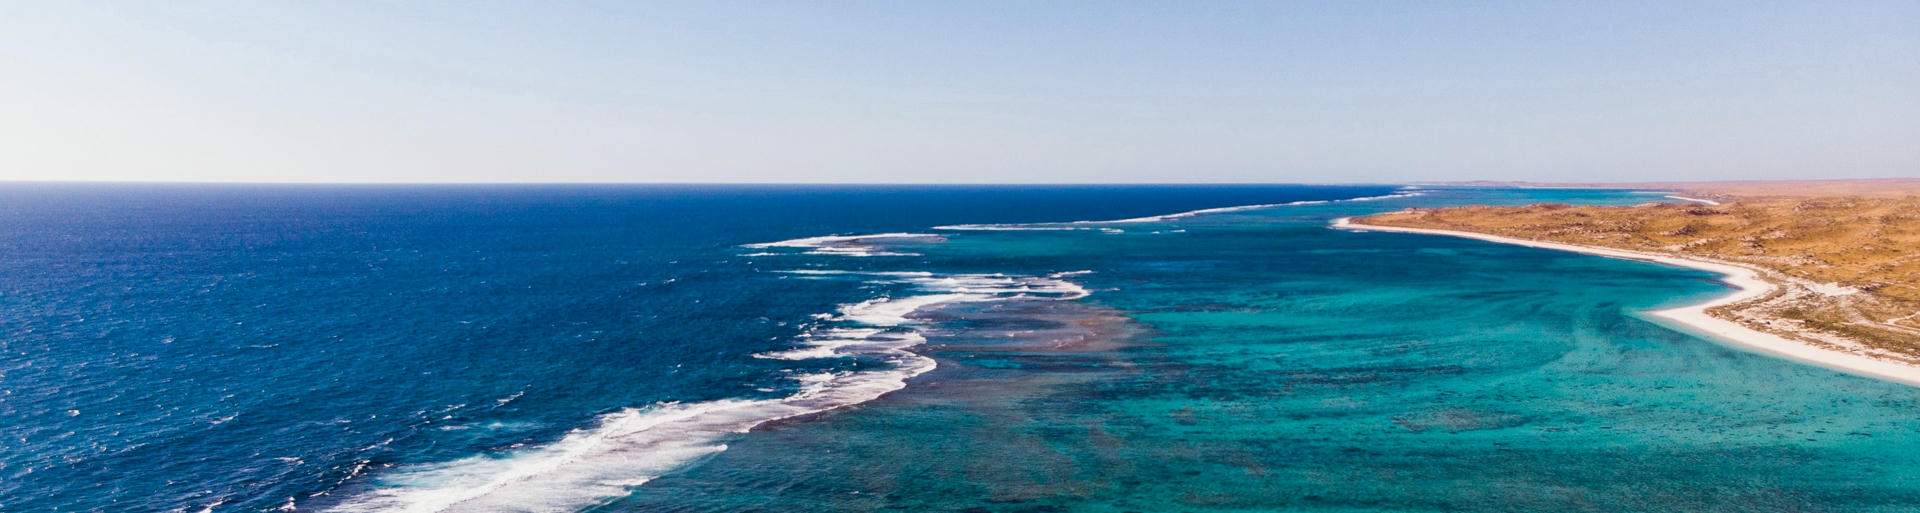 ningaloo reef, western australia schnorcheln, australien westküste, exmouth, cape range nationalpark